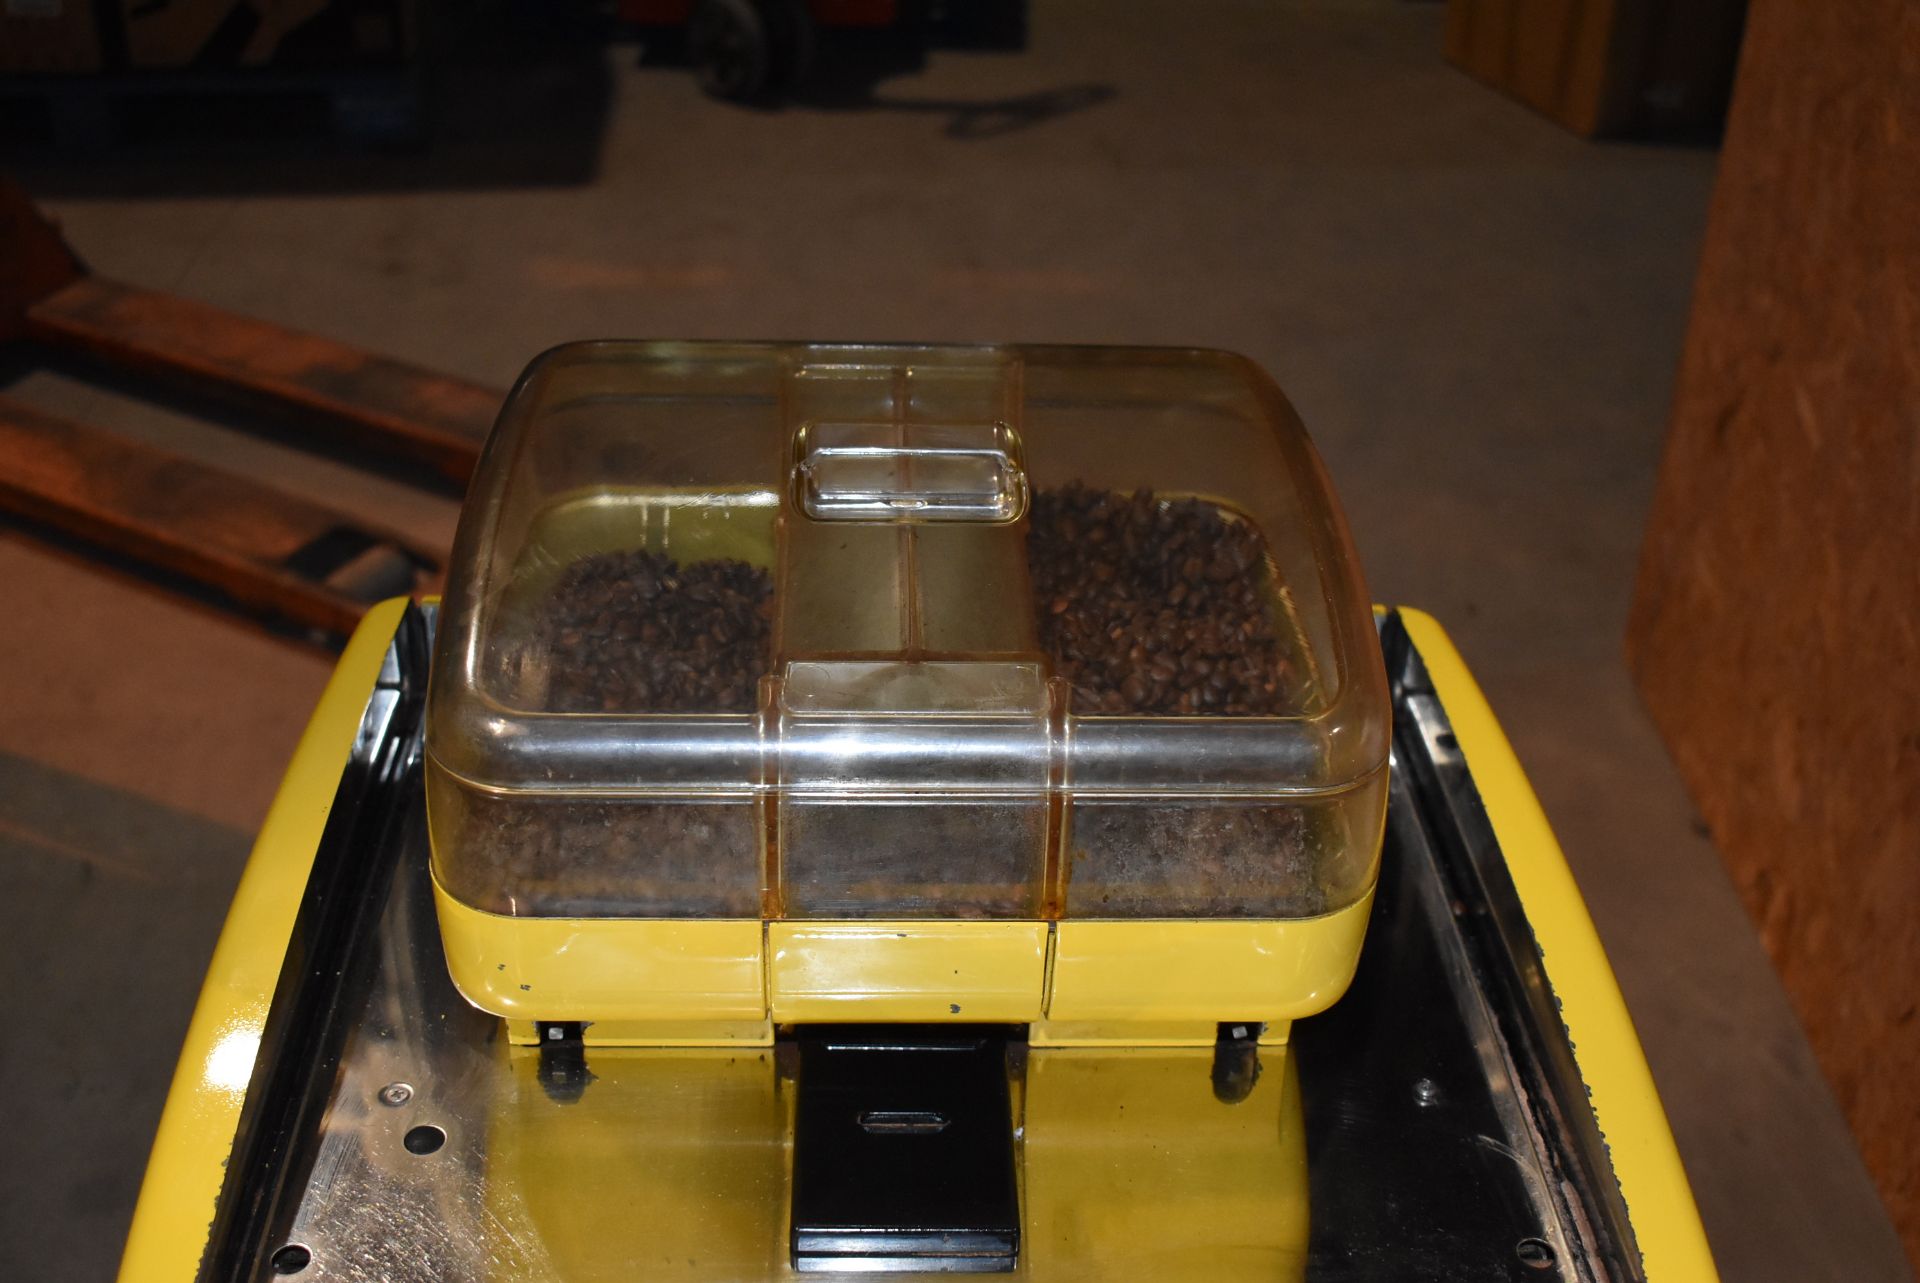 1 x La Cimbali S39 Barsystem Espresso Bean to Cup Coffee Machine - Bright Yellow Finish - 240V Plug - Image 13 of 14